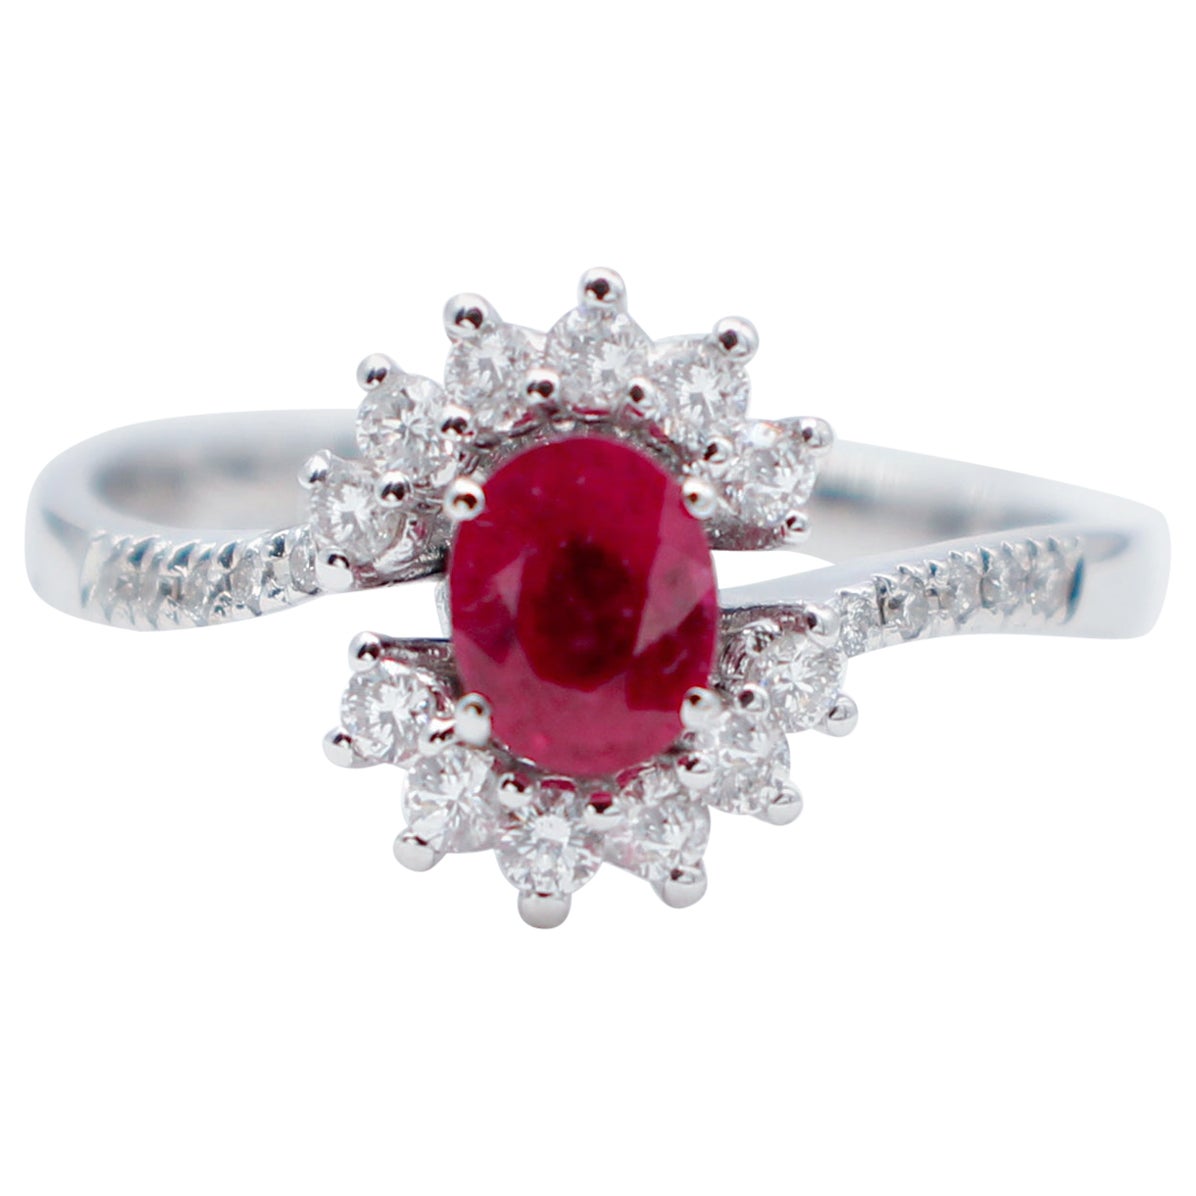 Rubies, White Diamonds, 18 Karat White Gold Engagement Ring For Sale